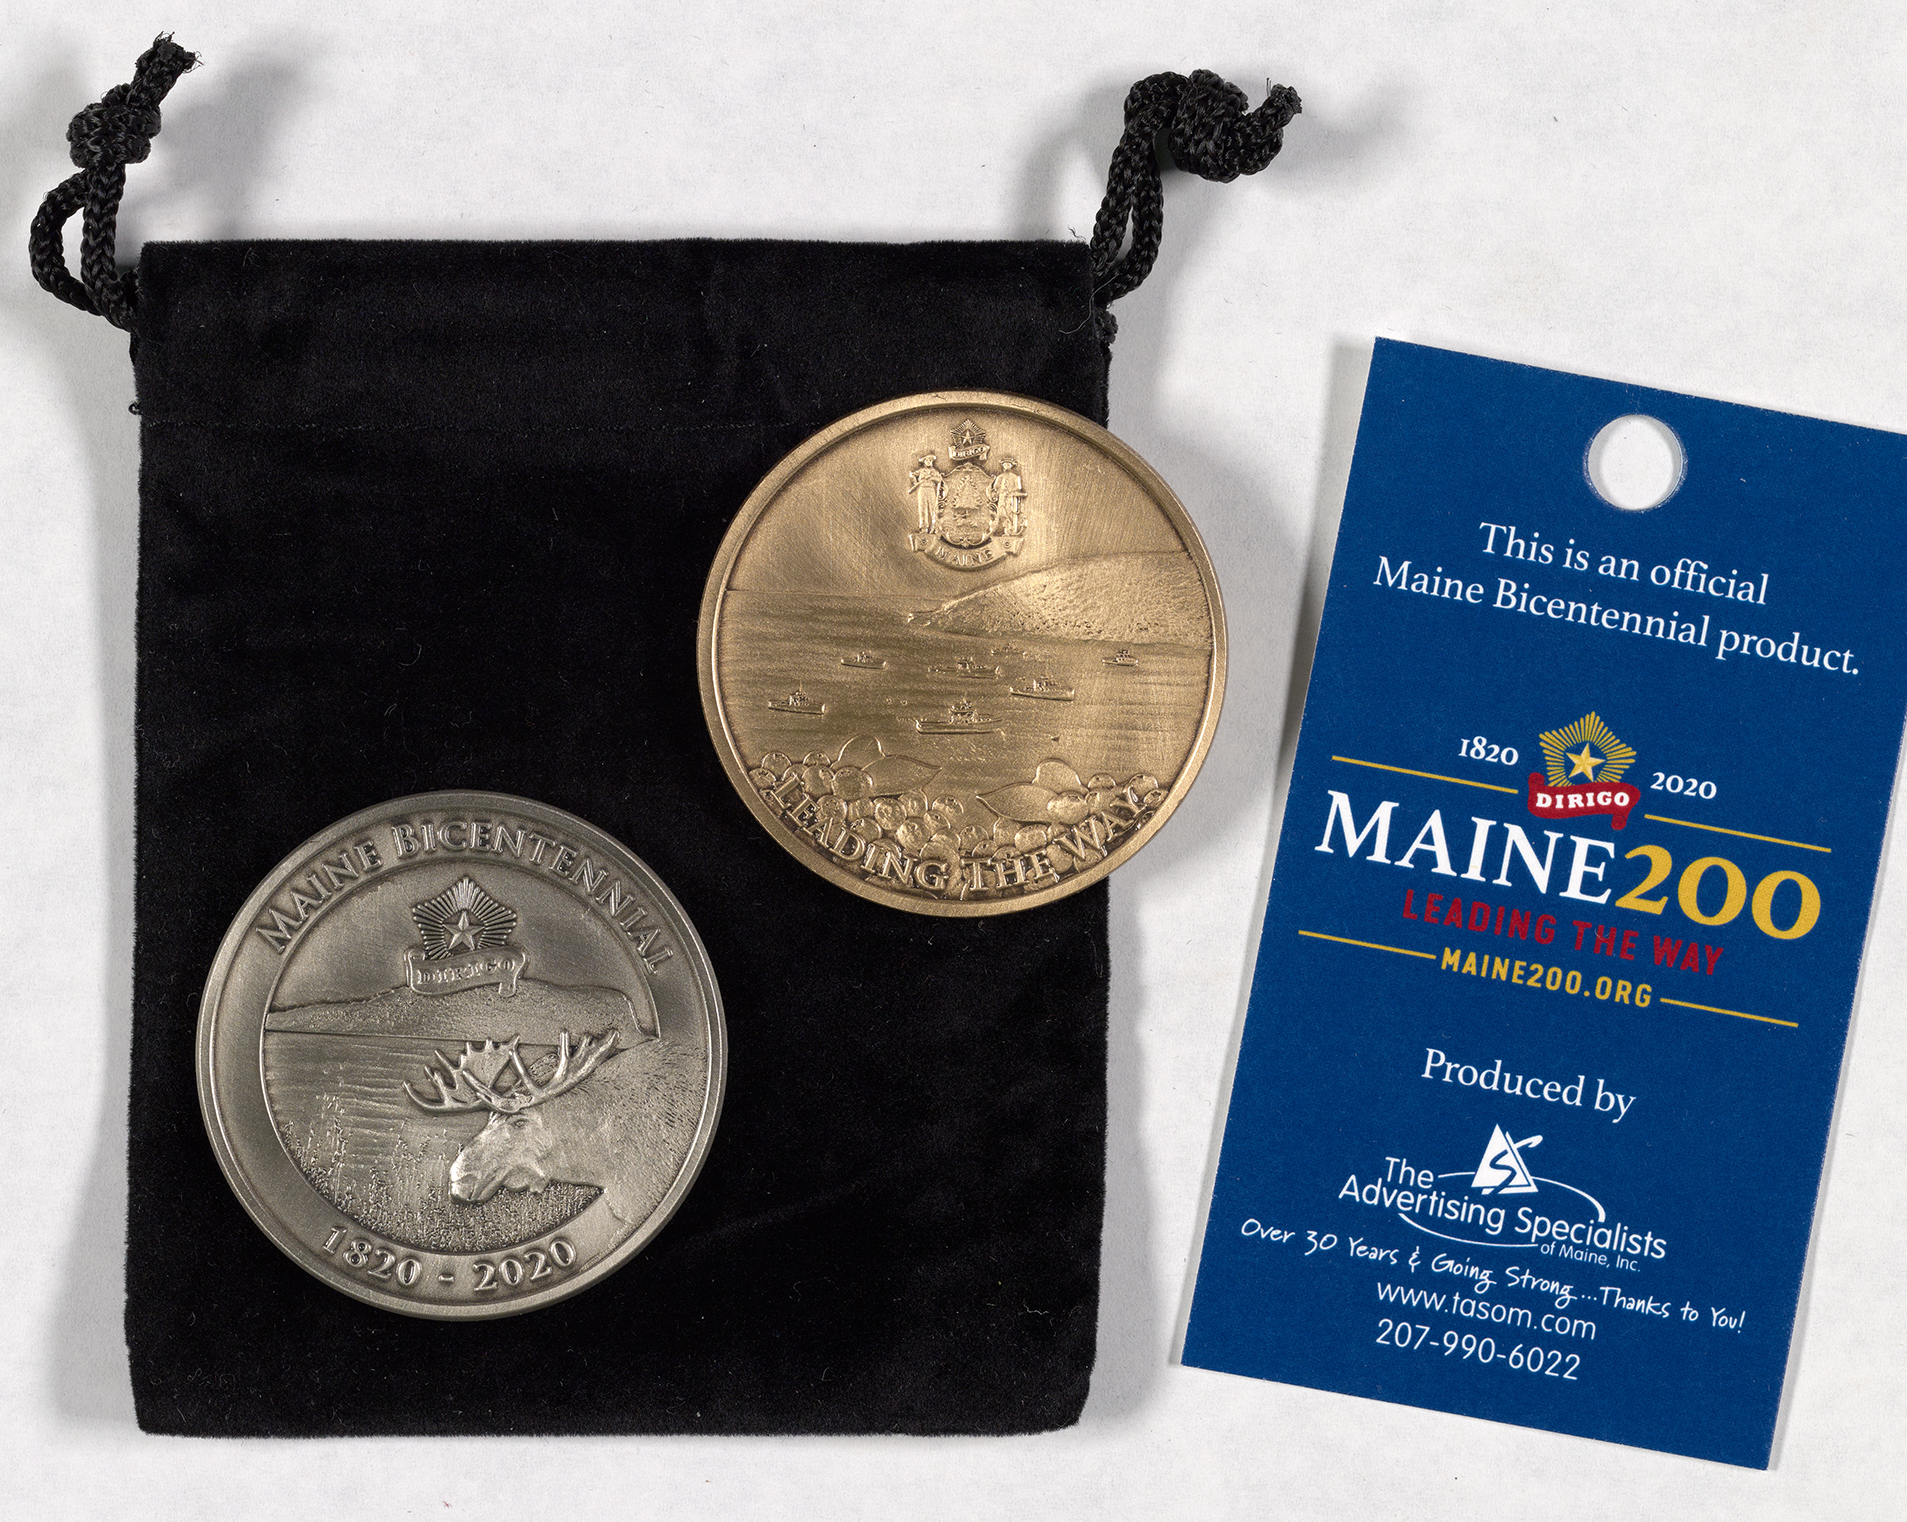 Bicentennial coin image